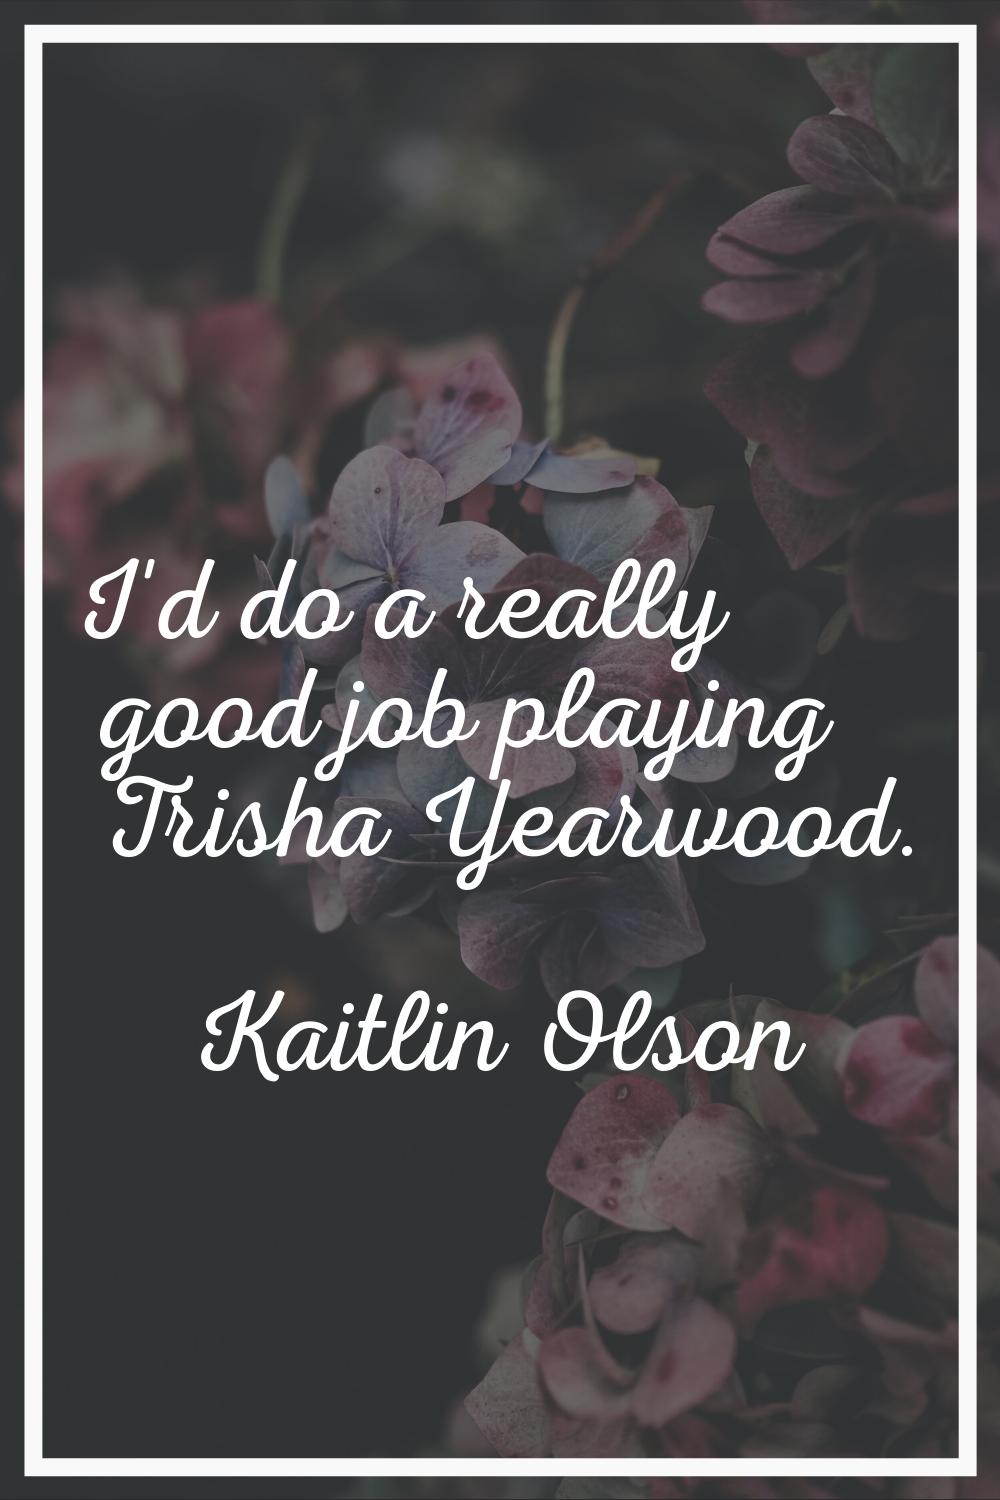 I'd do a really good job playing Trisha Yearwood.